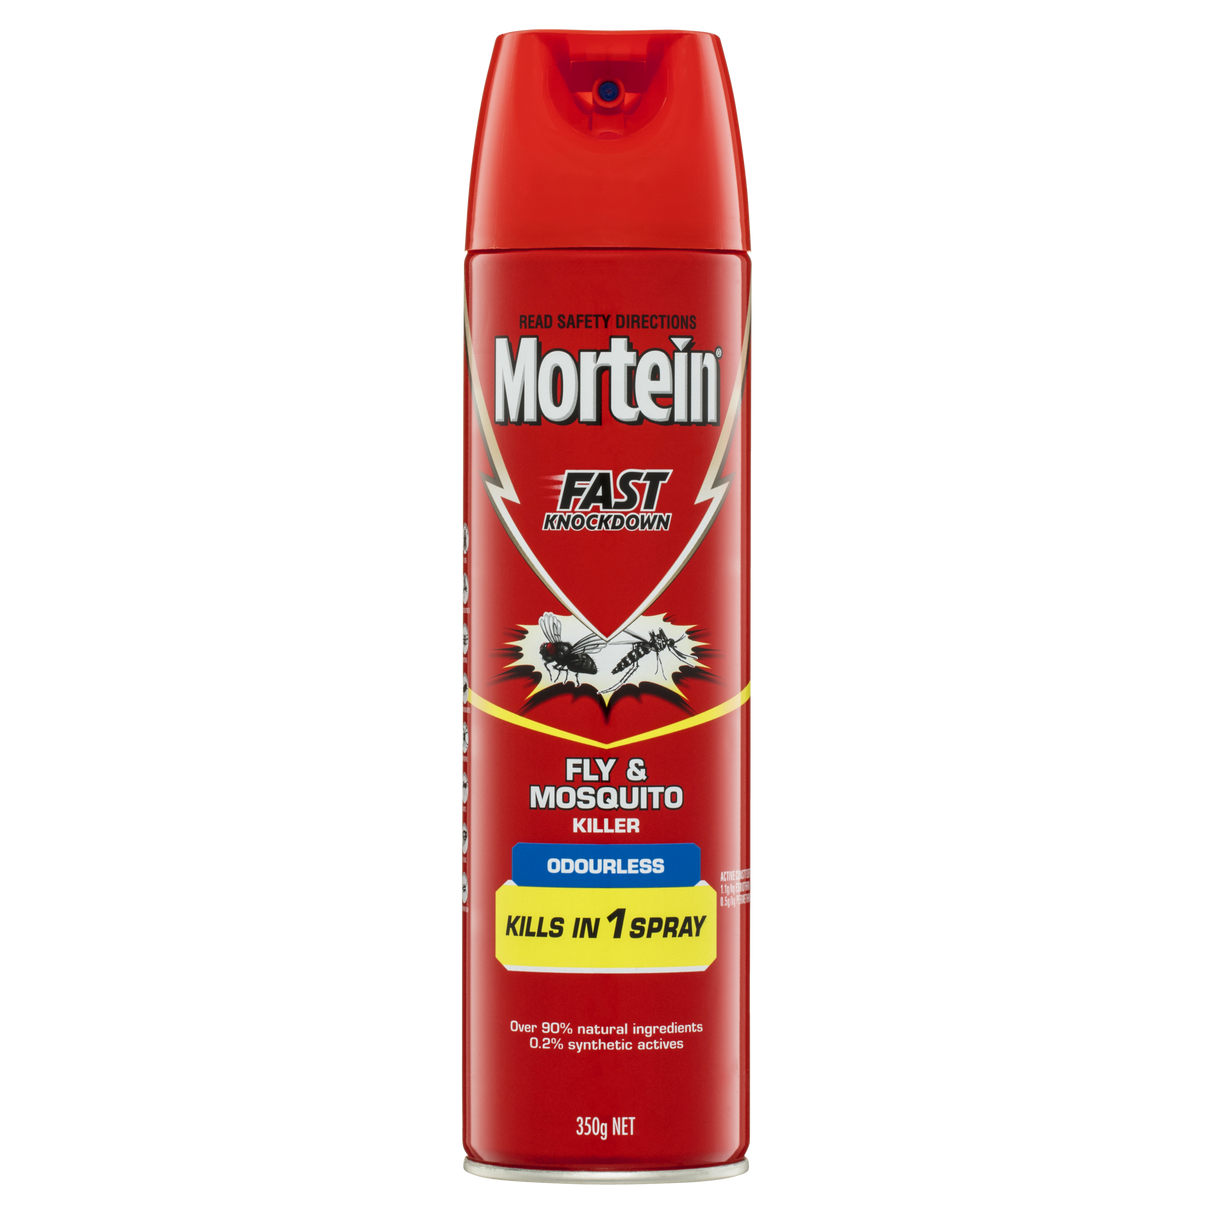 Mortein Fast Knockdown Fly & Mosquito Killer Odourless Spray 350g